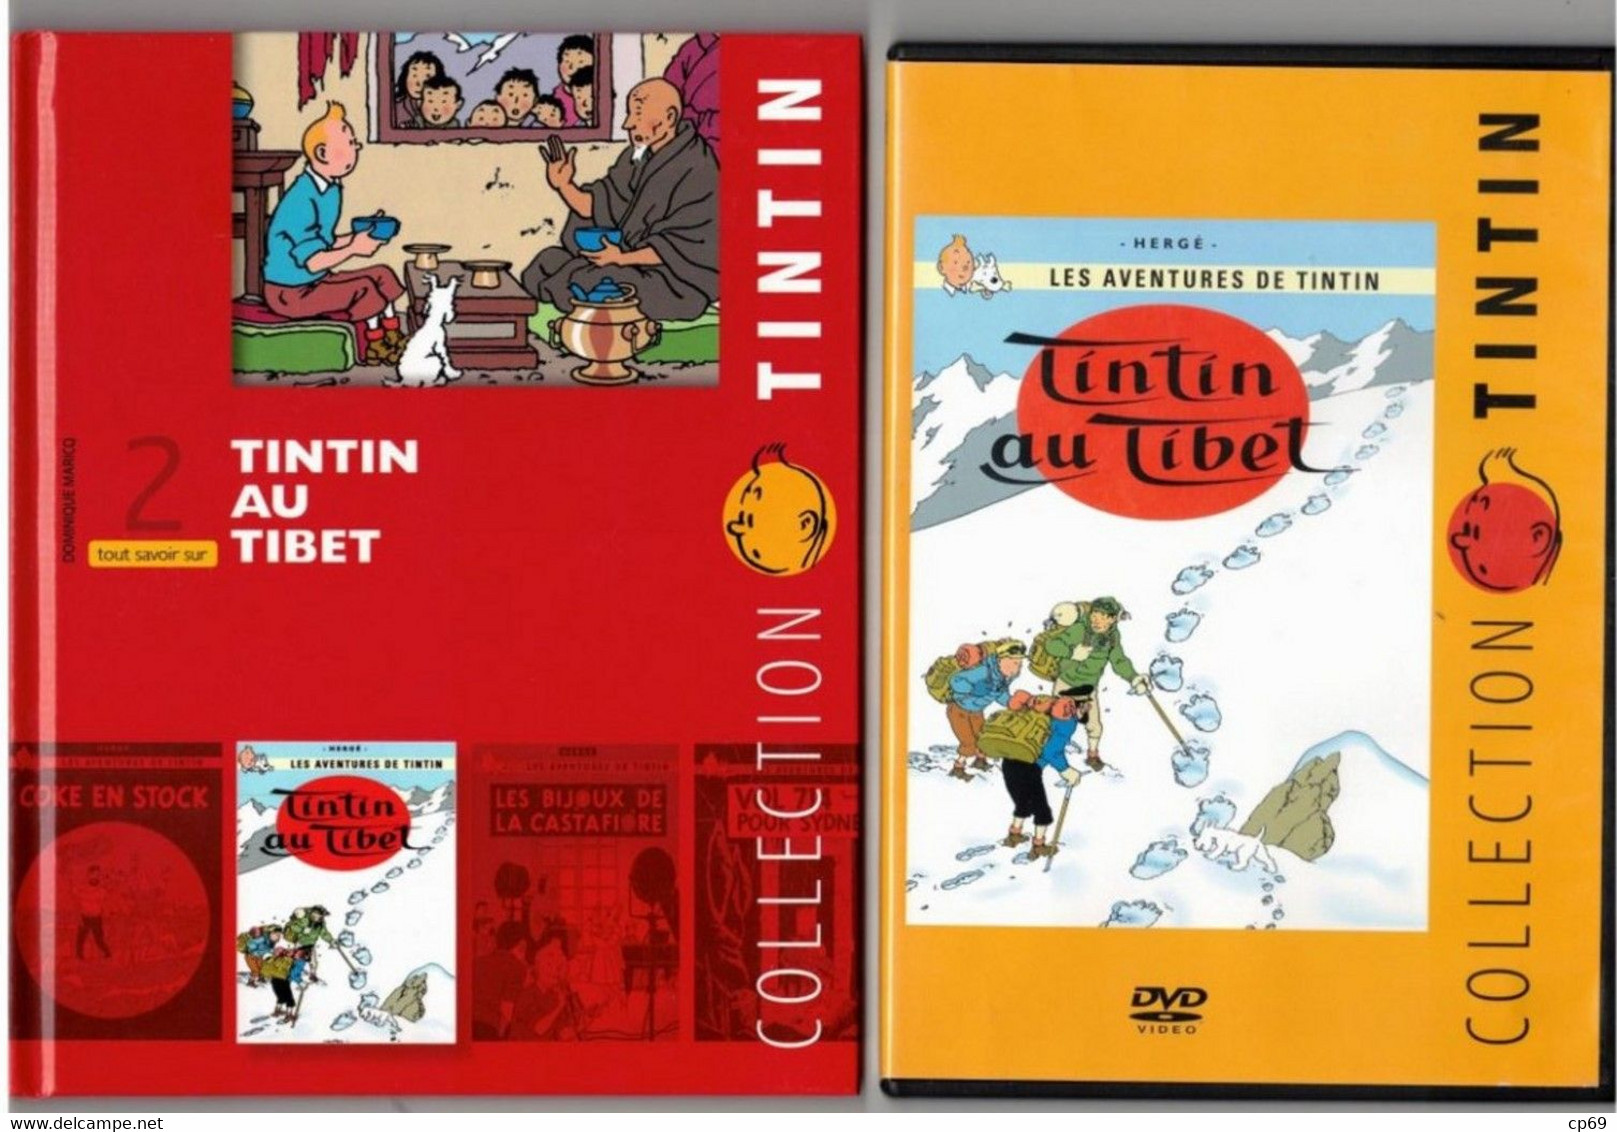 Tintin Hergé / Moulinsart 2010 Milou Chien Dog Cane Tintin Au Tibet Capitaine Haddock N°2 DVD + Livret Explicatif B.Etat - Cartoons